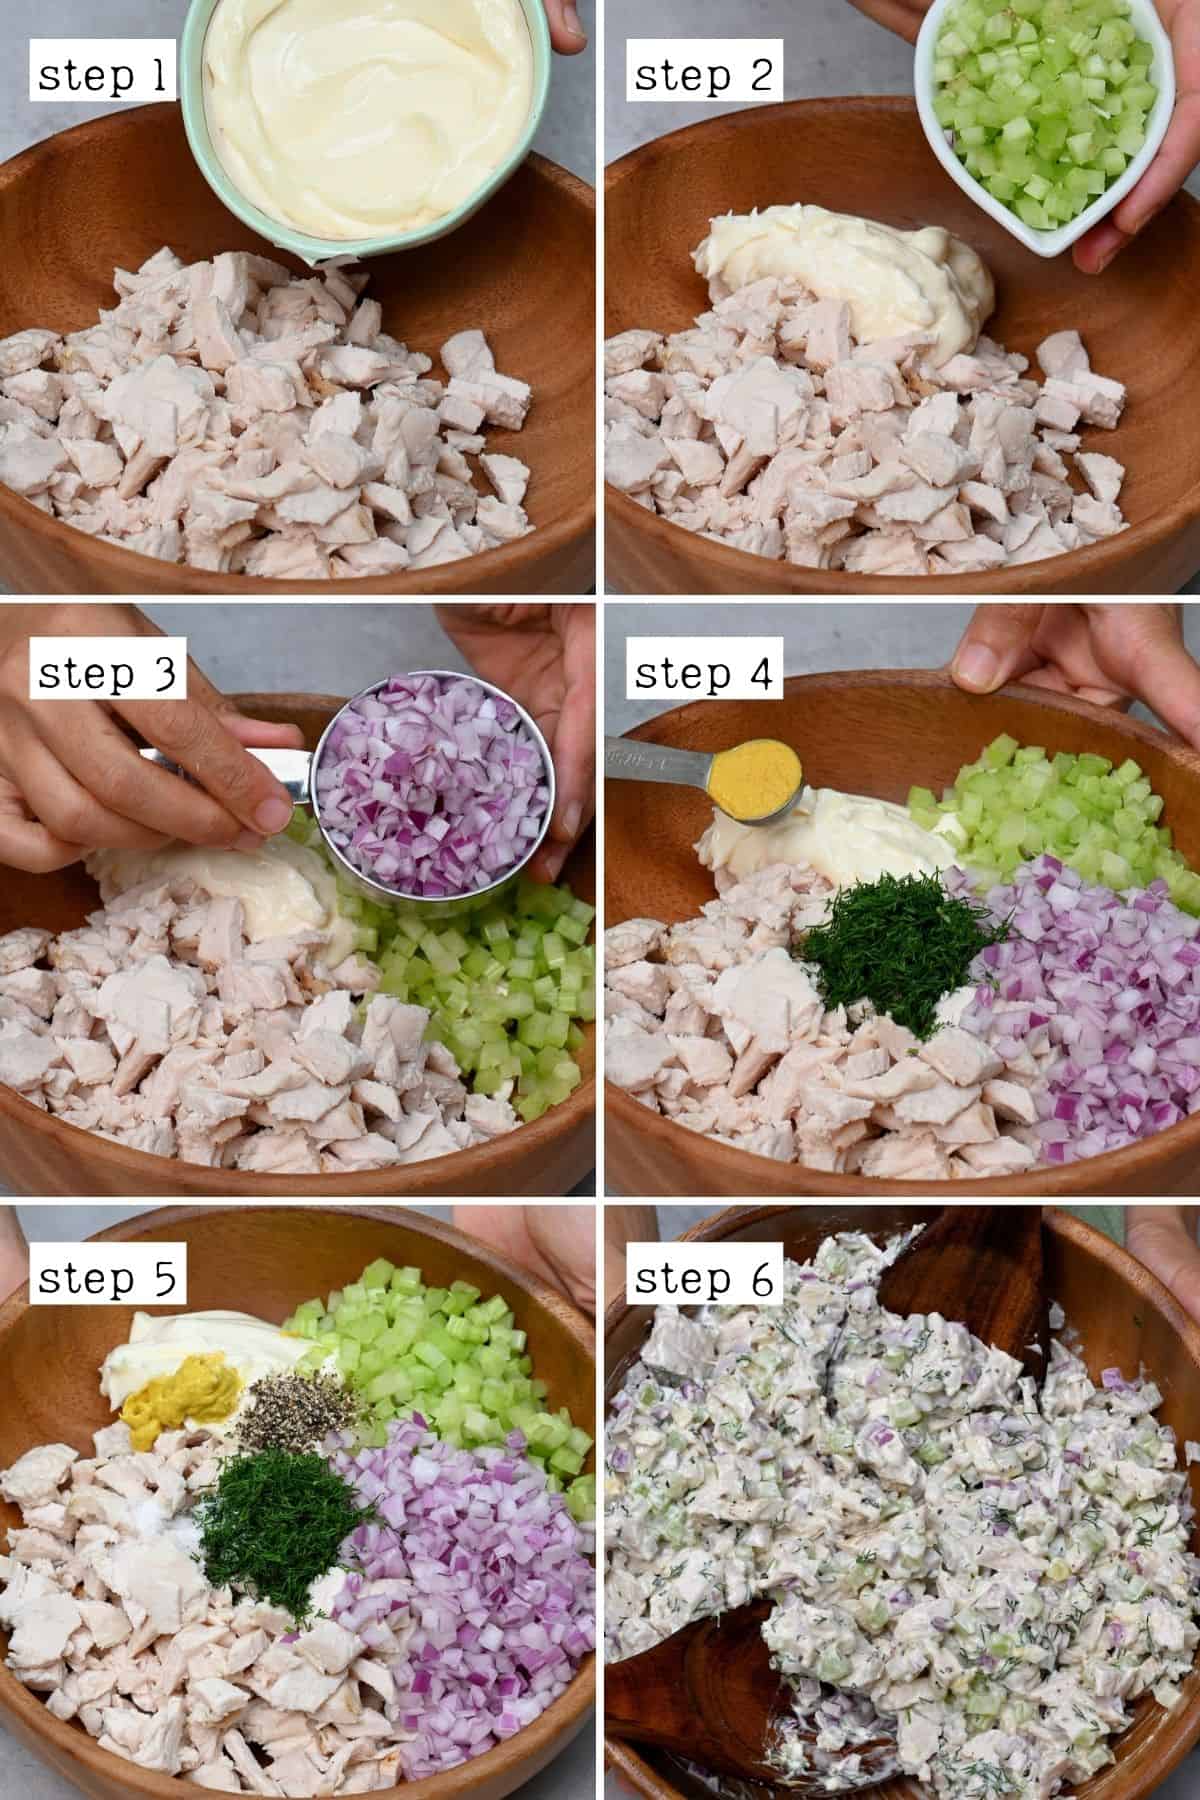 Steps for preparing chicken salad